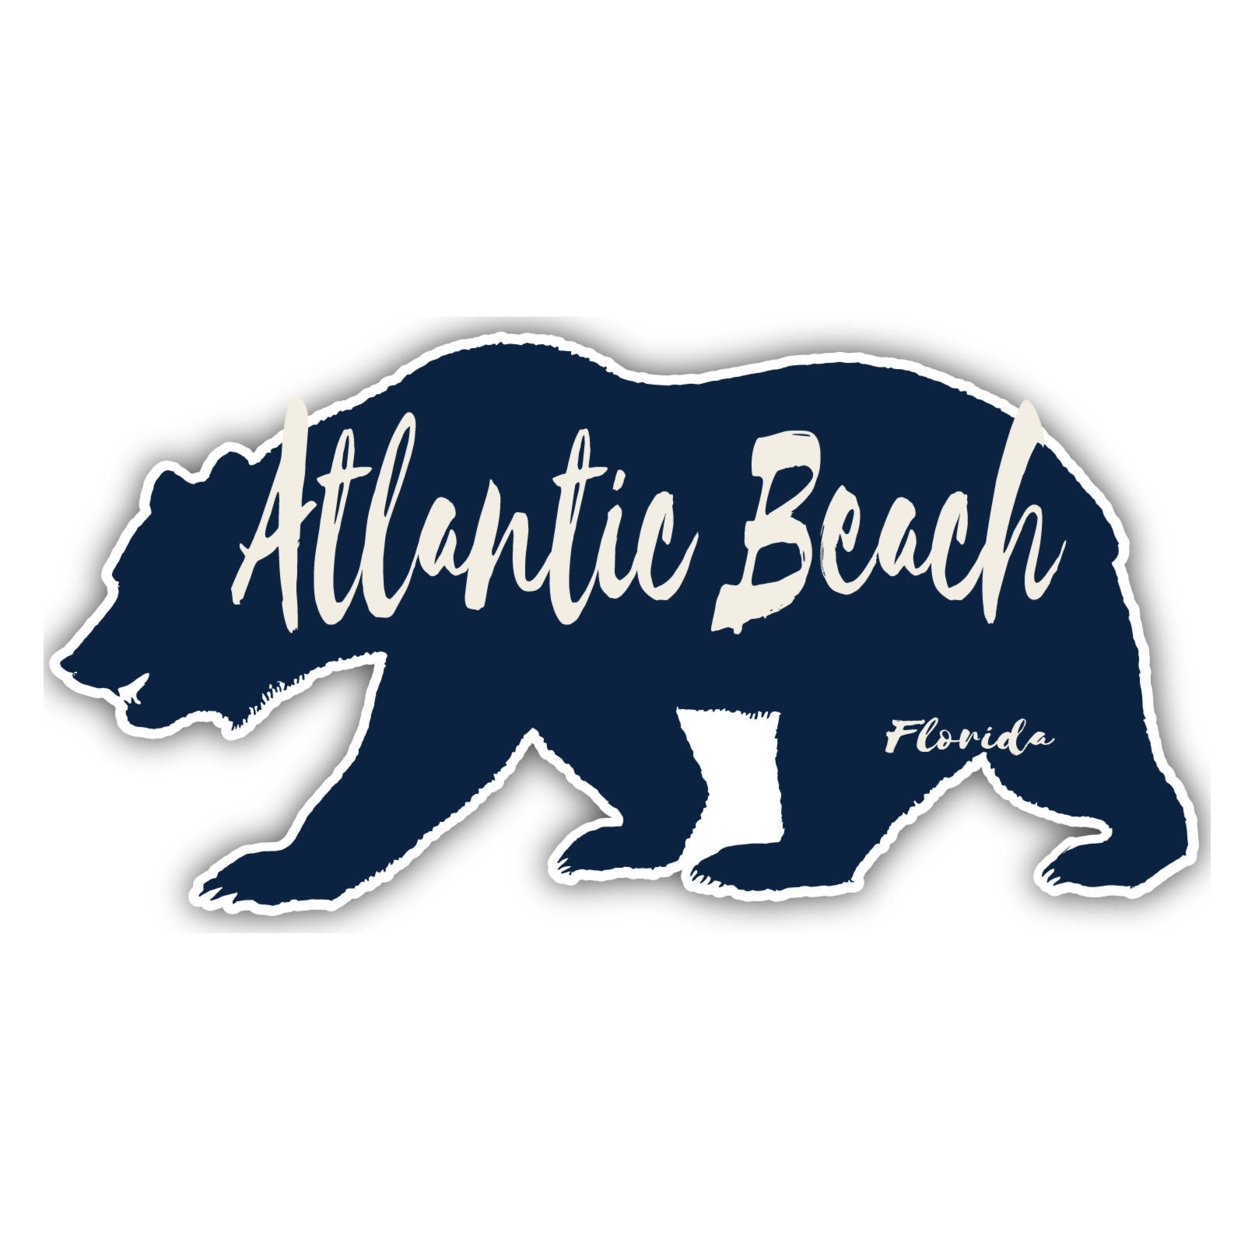 Atlantic Beach Florida Souvenir Decorative Stickers (Choose Theme And Size) - 4-Pack, 6-Inch, Bear